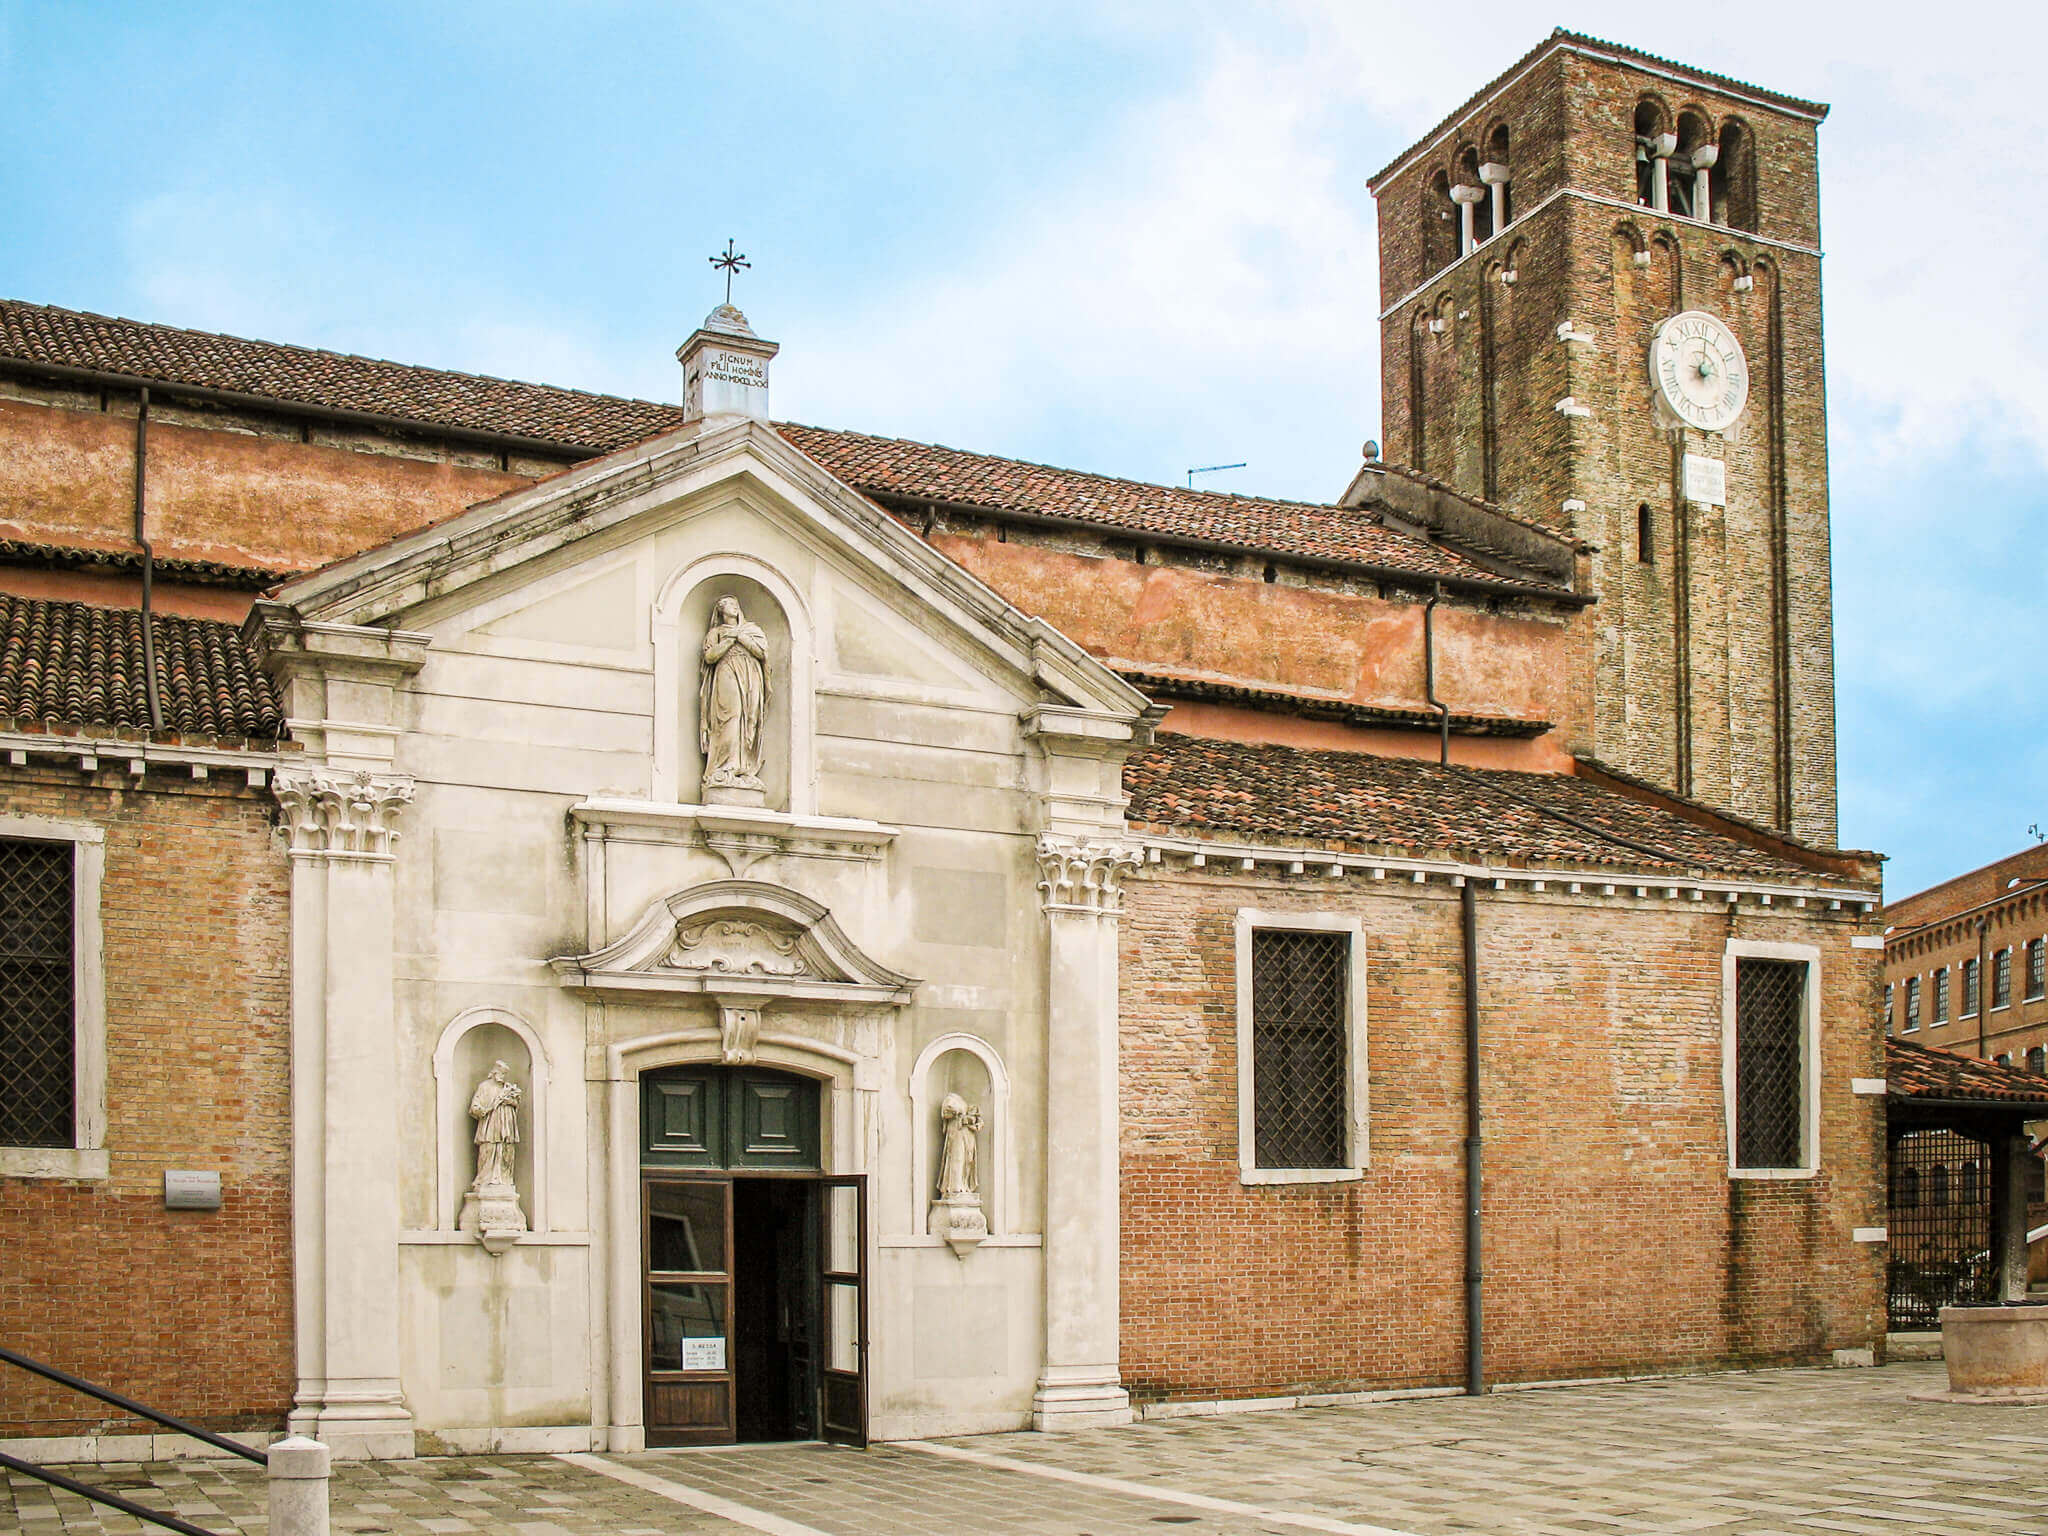 The the San Nicolò church in Venice